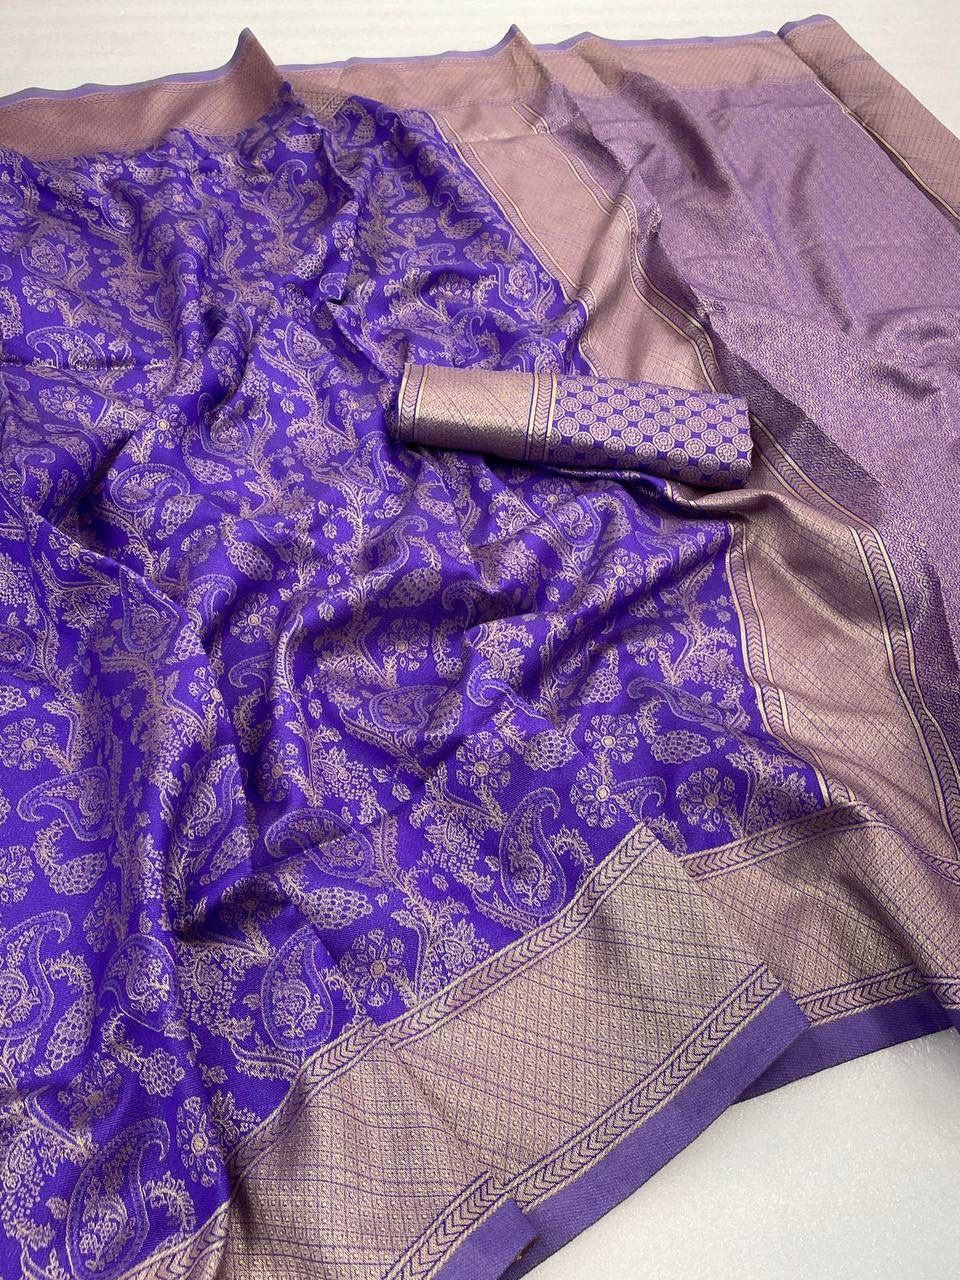 Pure Banarasi Copper Zari Weaving Stunning Lavender Colour Saree Comes With Heavy Brocade Blouse